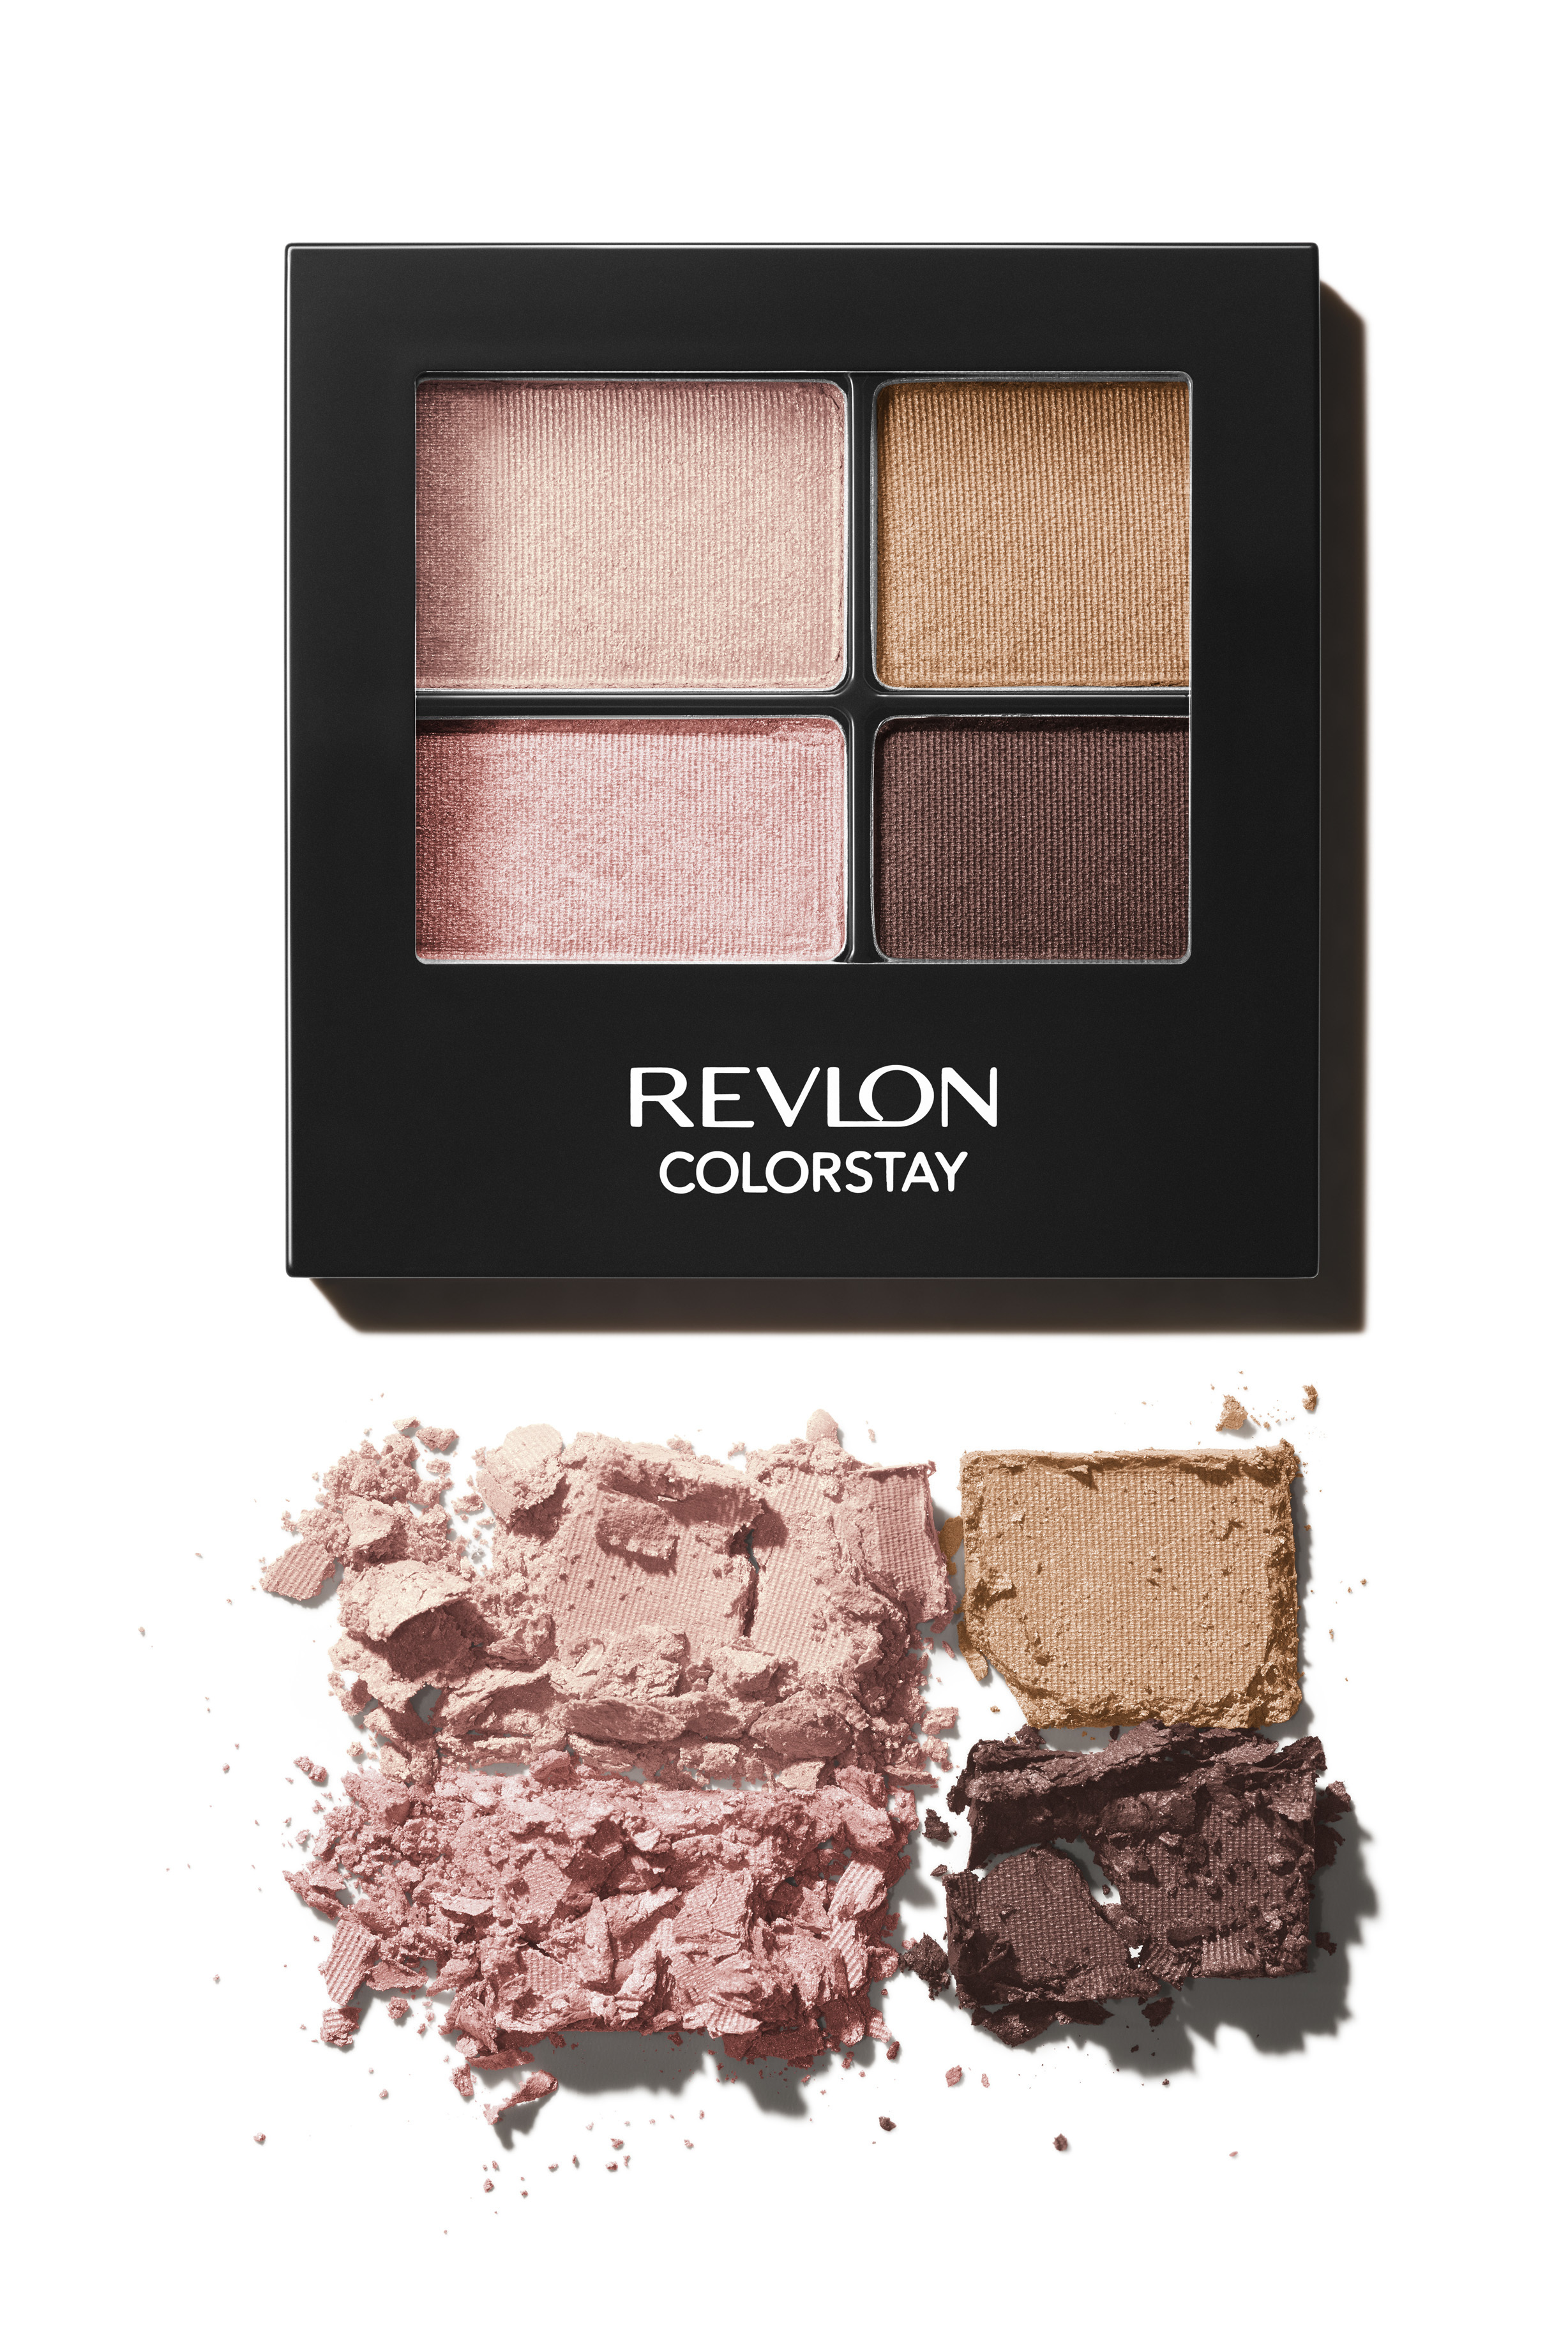 Revlon ColorStay Eyeshadow Quad w/ Applicator Brush (Decadent) $1.60 + Free Shipping w/ Prime, Walmart+ or $25+